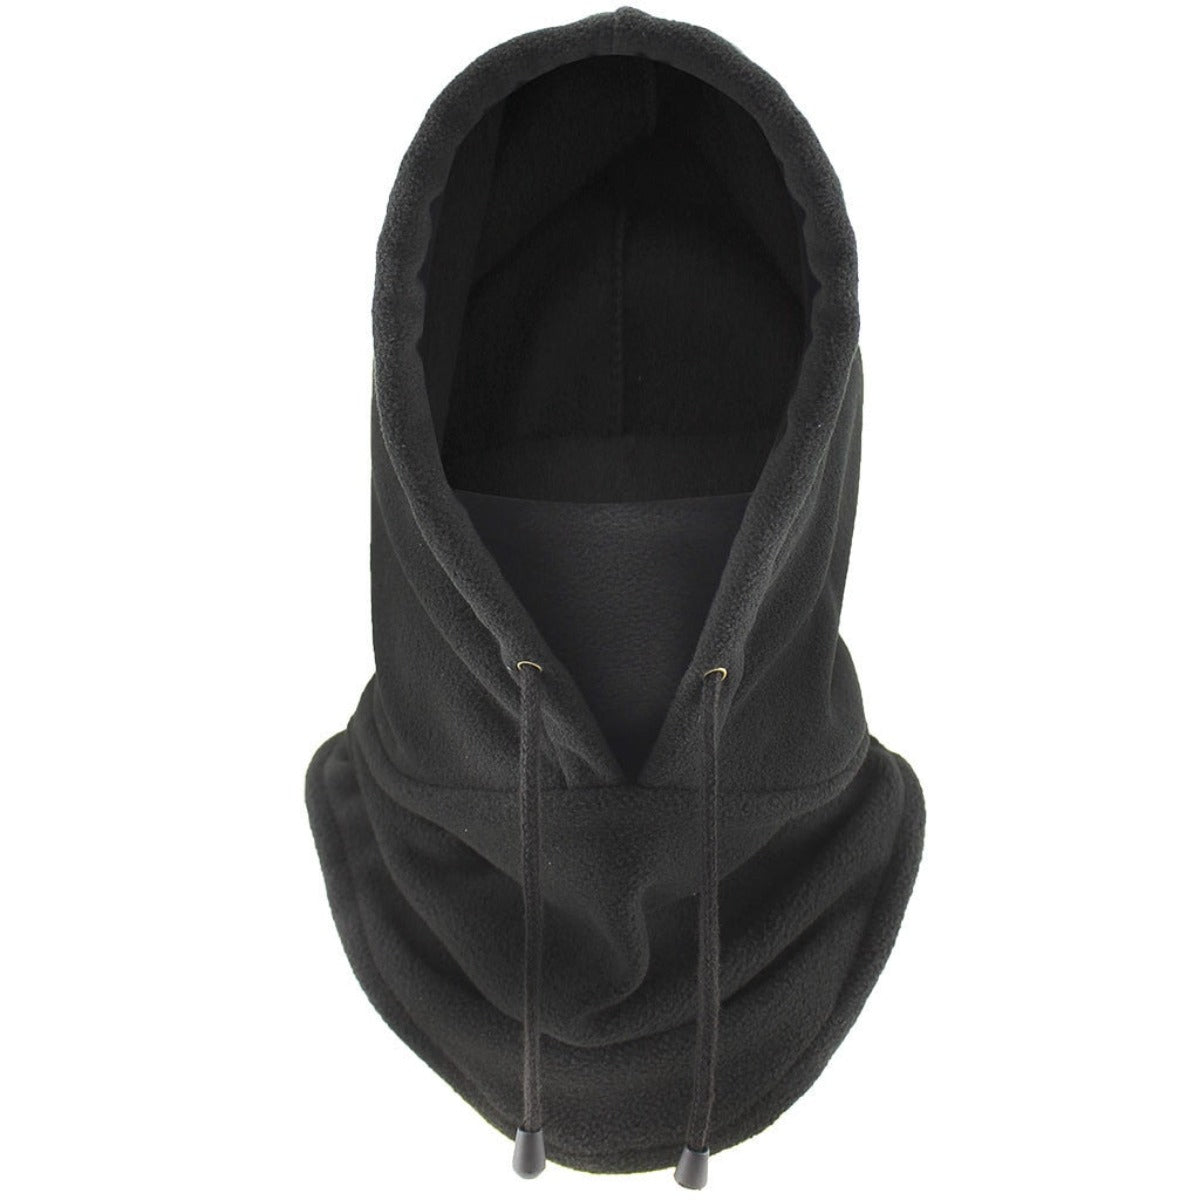 Thermal Fleece Hoodie Face Cover - Black